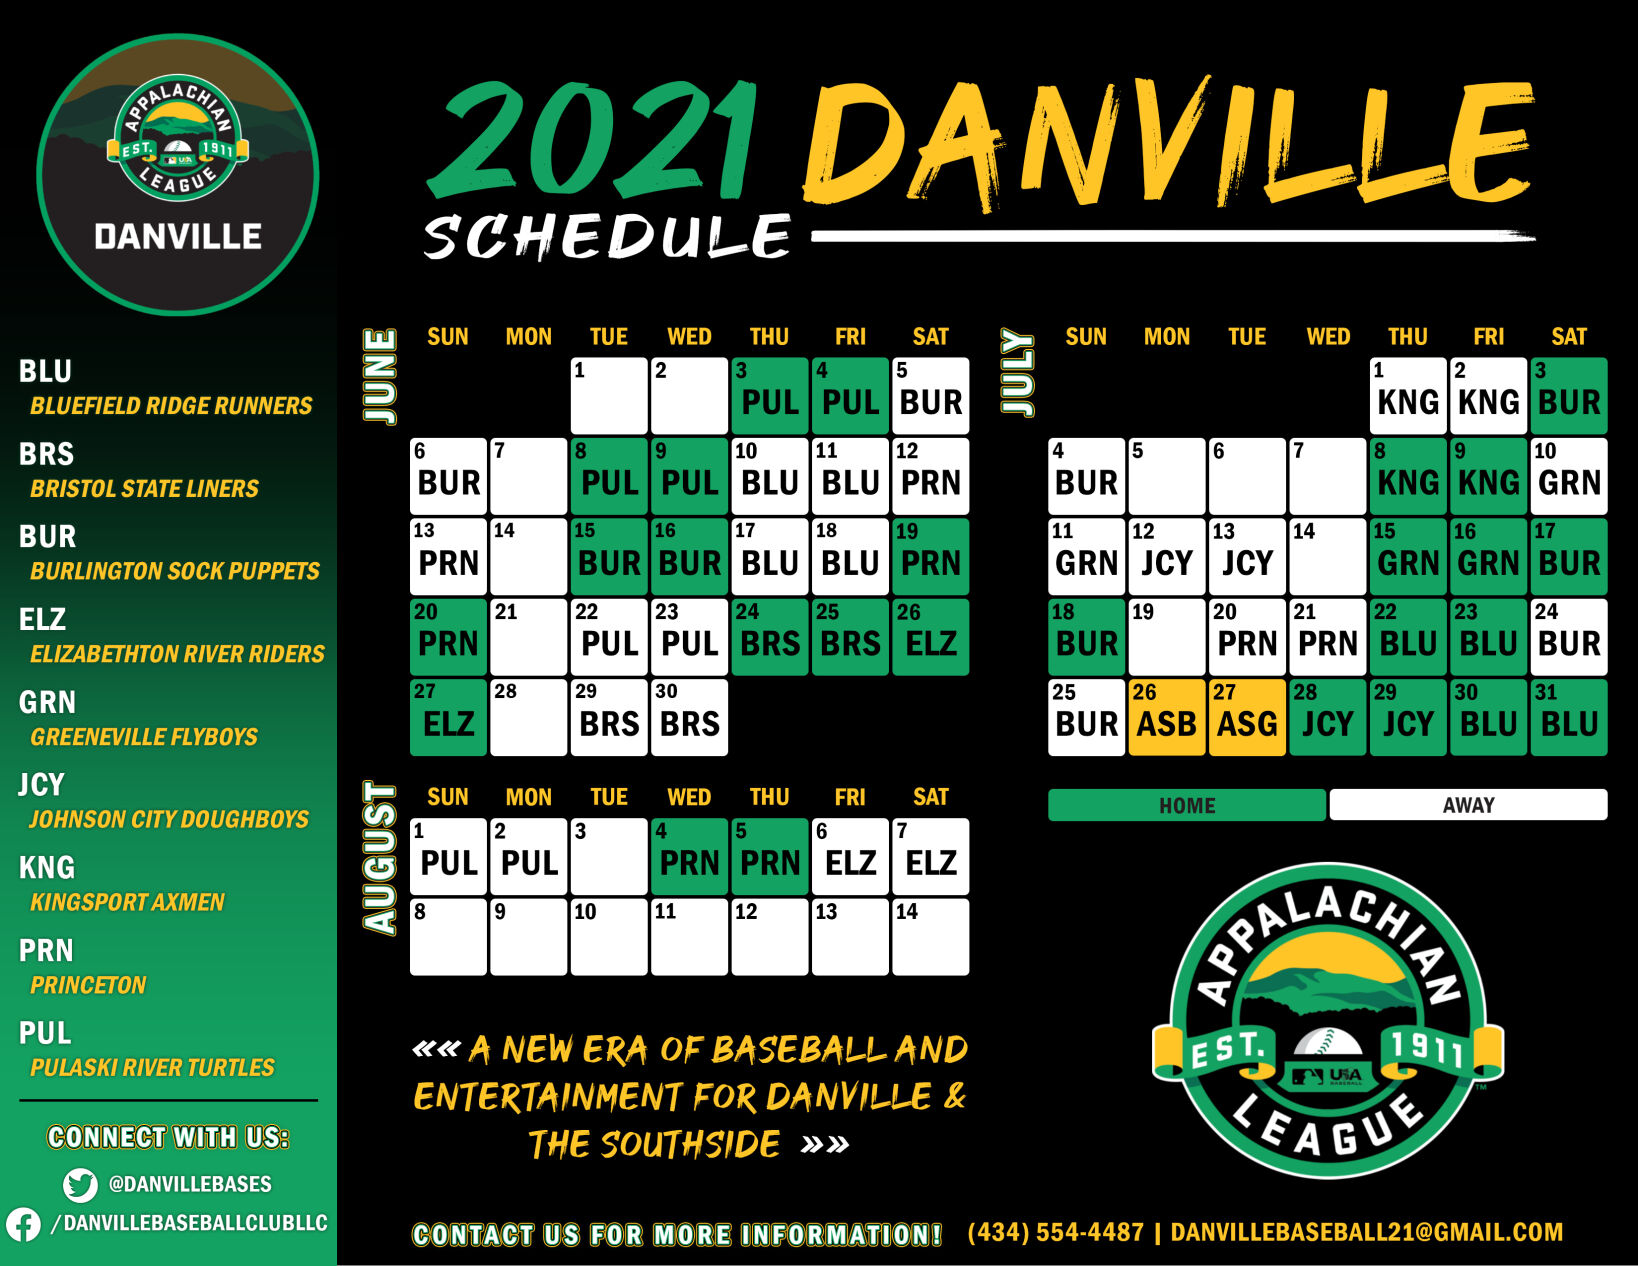 Appalachian League announces 2021 Danville baseball schedule to